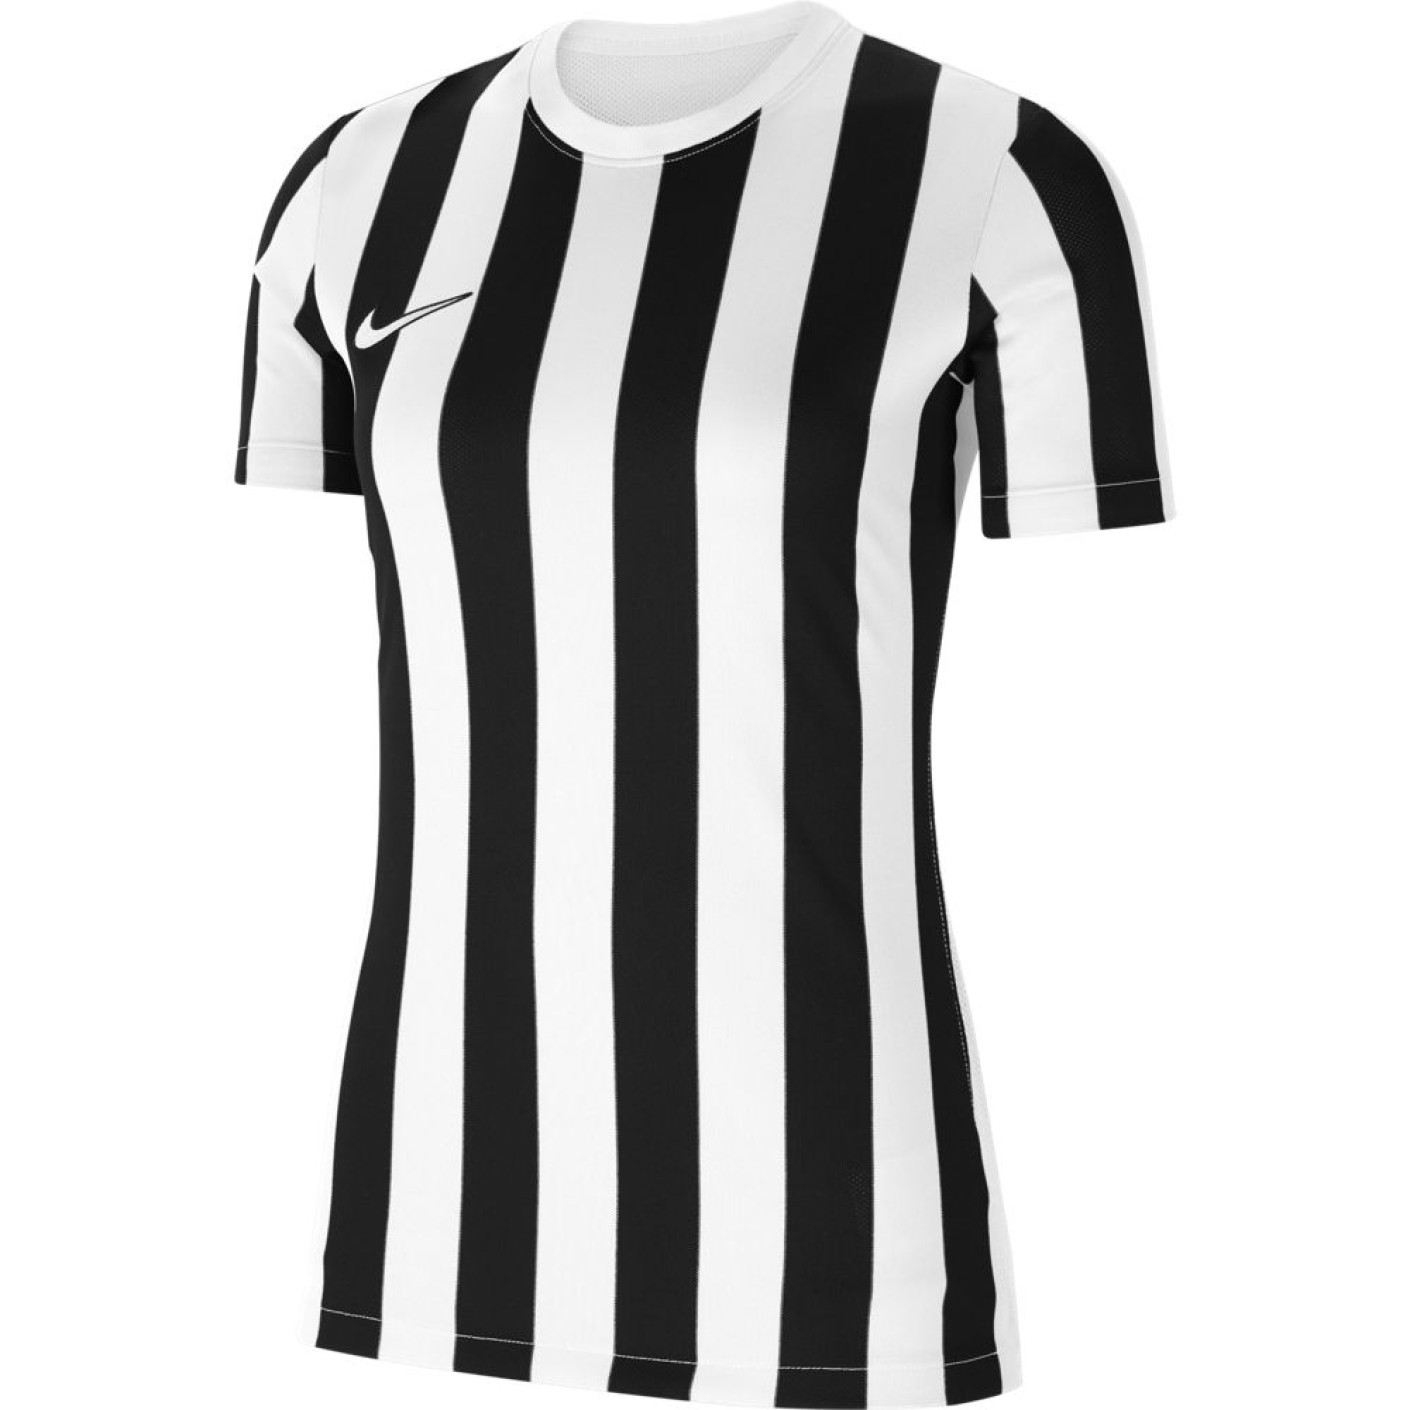 Nike Striped Division IV Women's Football Shirt White